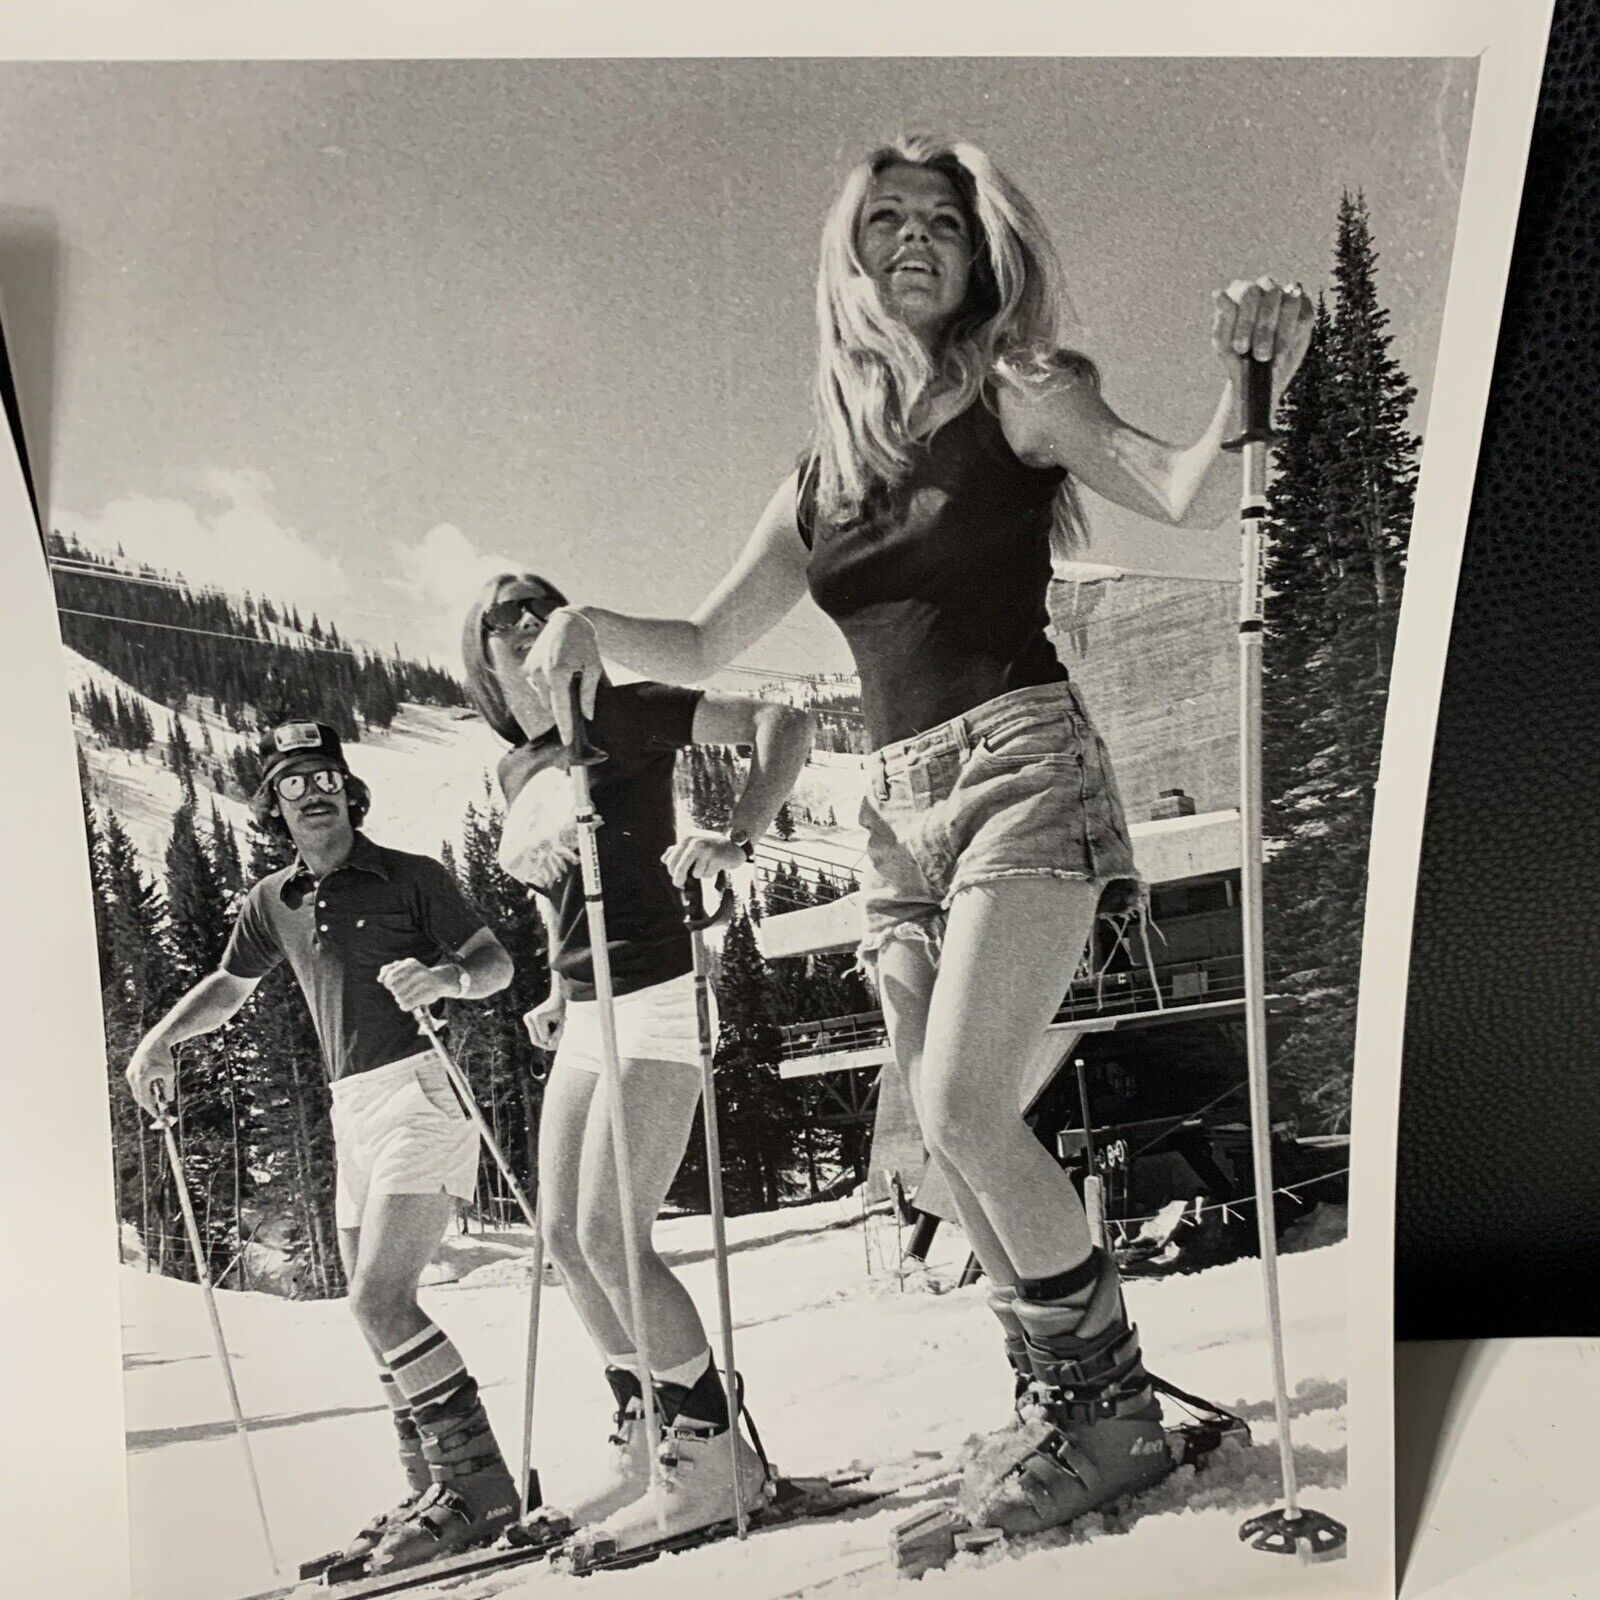 Vintage Snow Skiing Photos (4) 8x10 Black And White Photographs